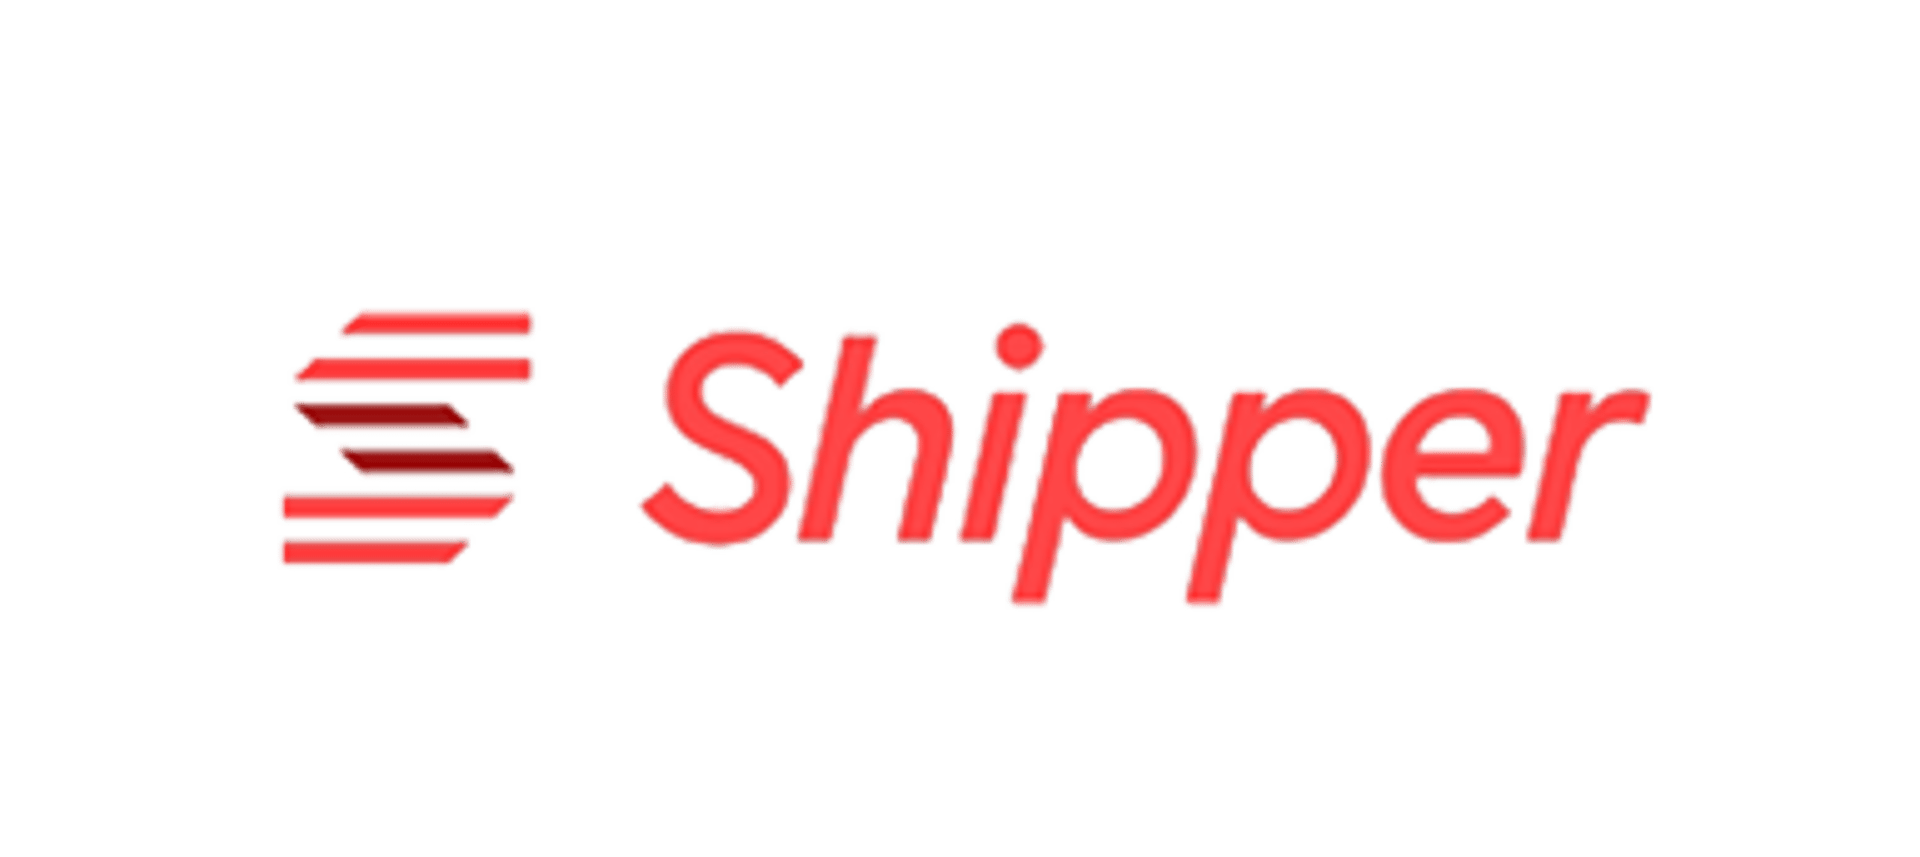 Shipper